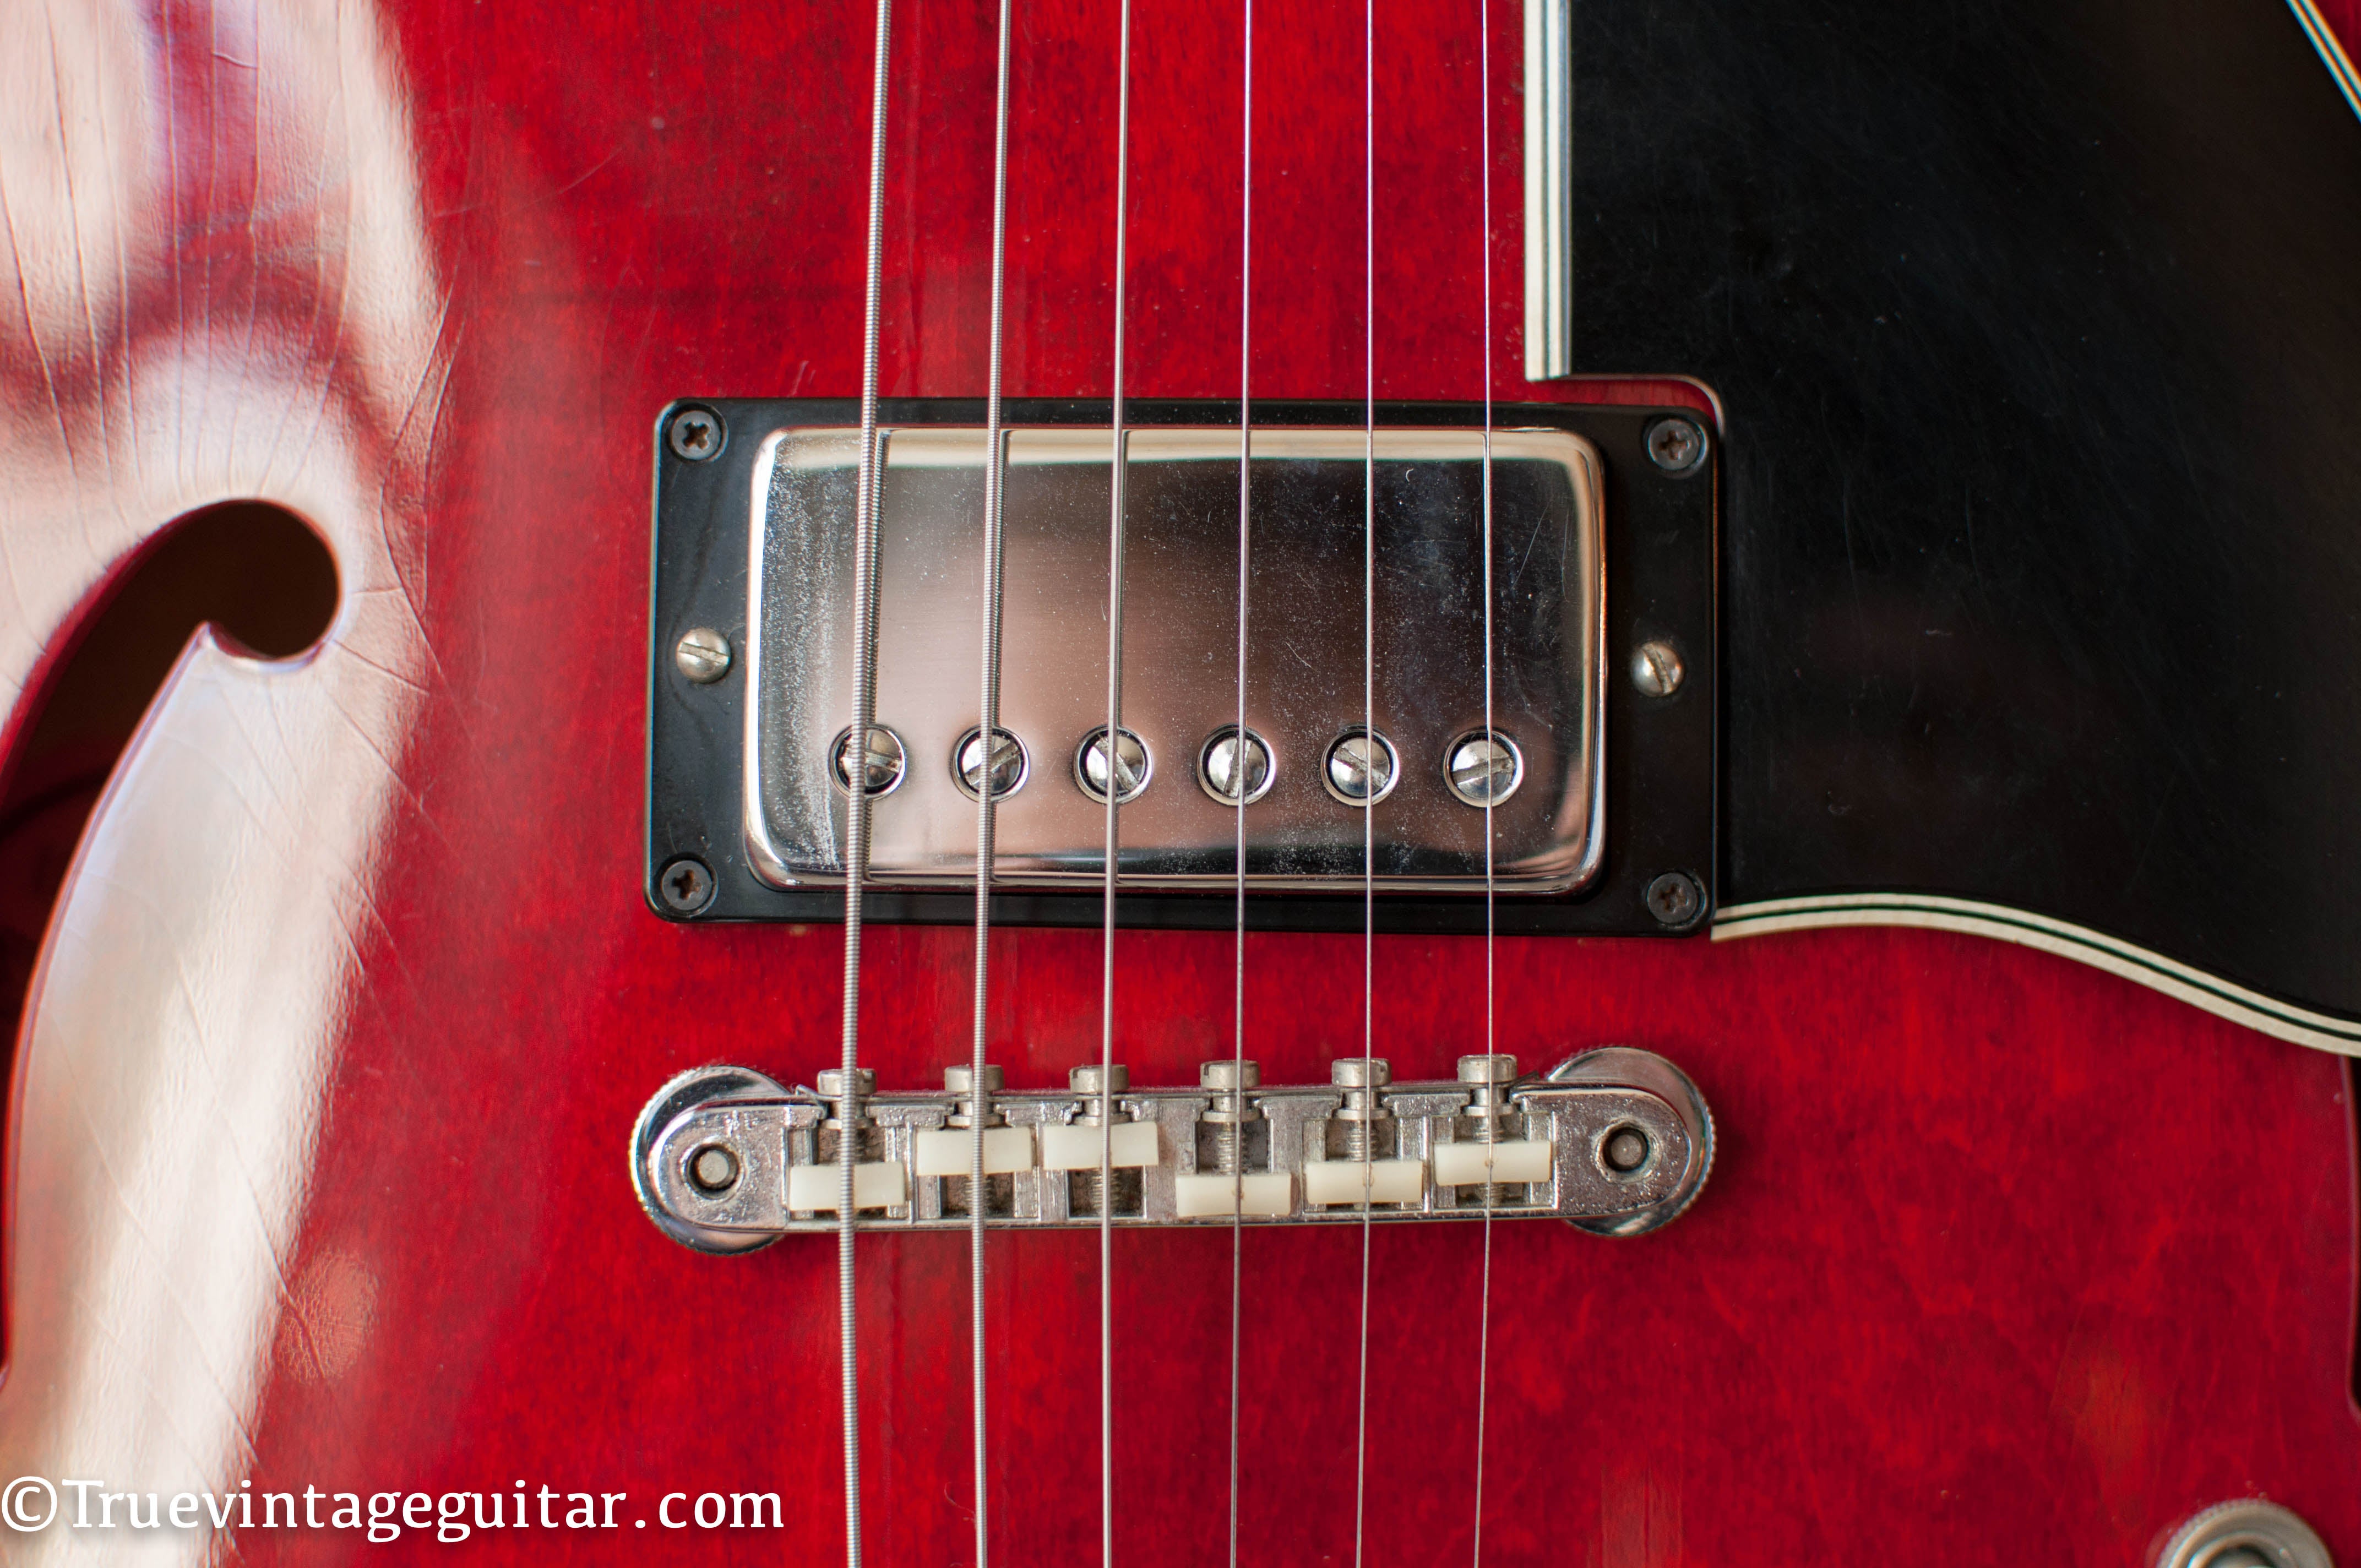 Humbucking pickup, patent sticker, nylon saddle tune-o-matic bridge, Vintage 1967 Gibson ES-335 Cherry red electric guitar